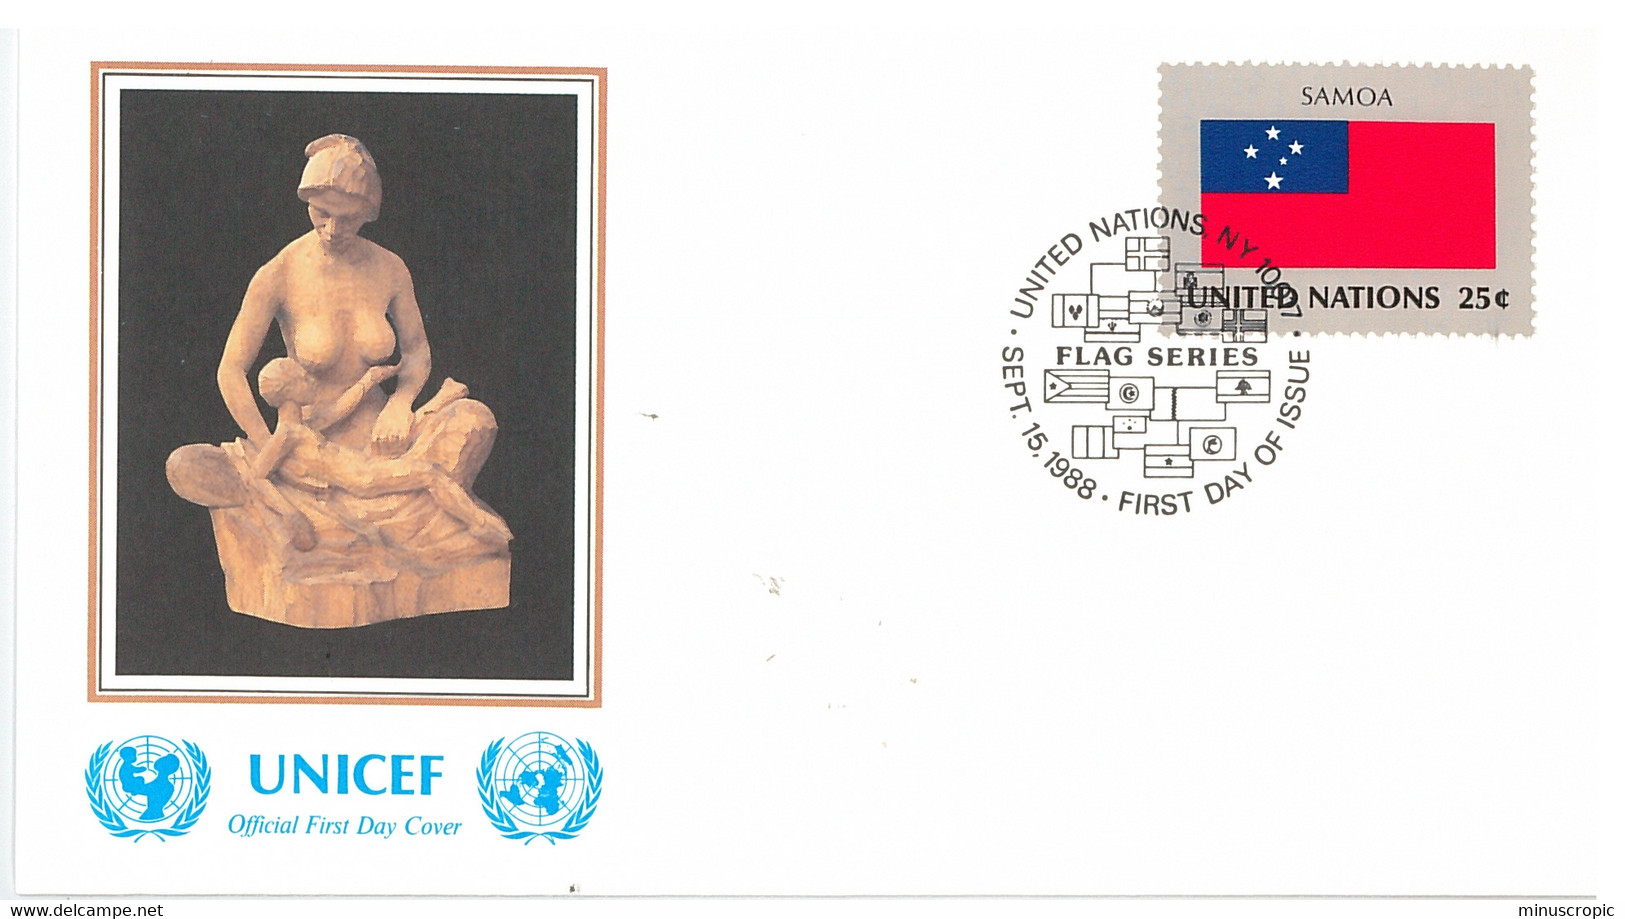 Enveloppe FDC United Nations - UNICEF - Flag Series 12/88 - Samoa - 1988 - Covers & Documents